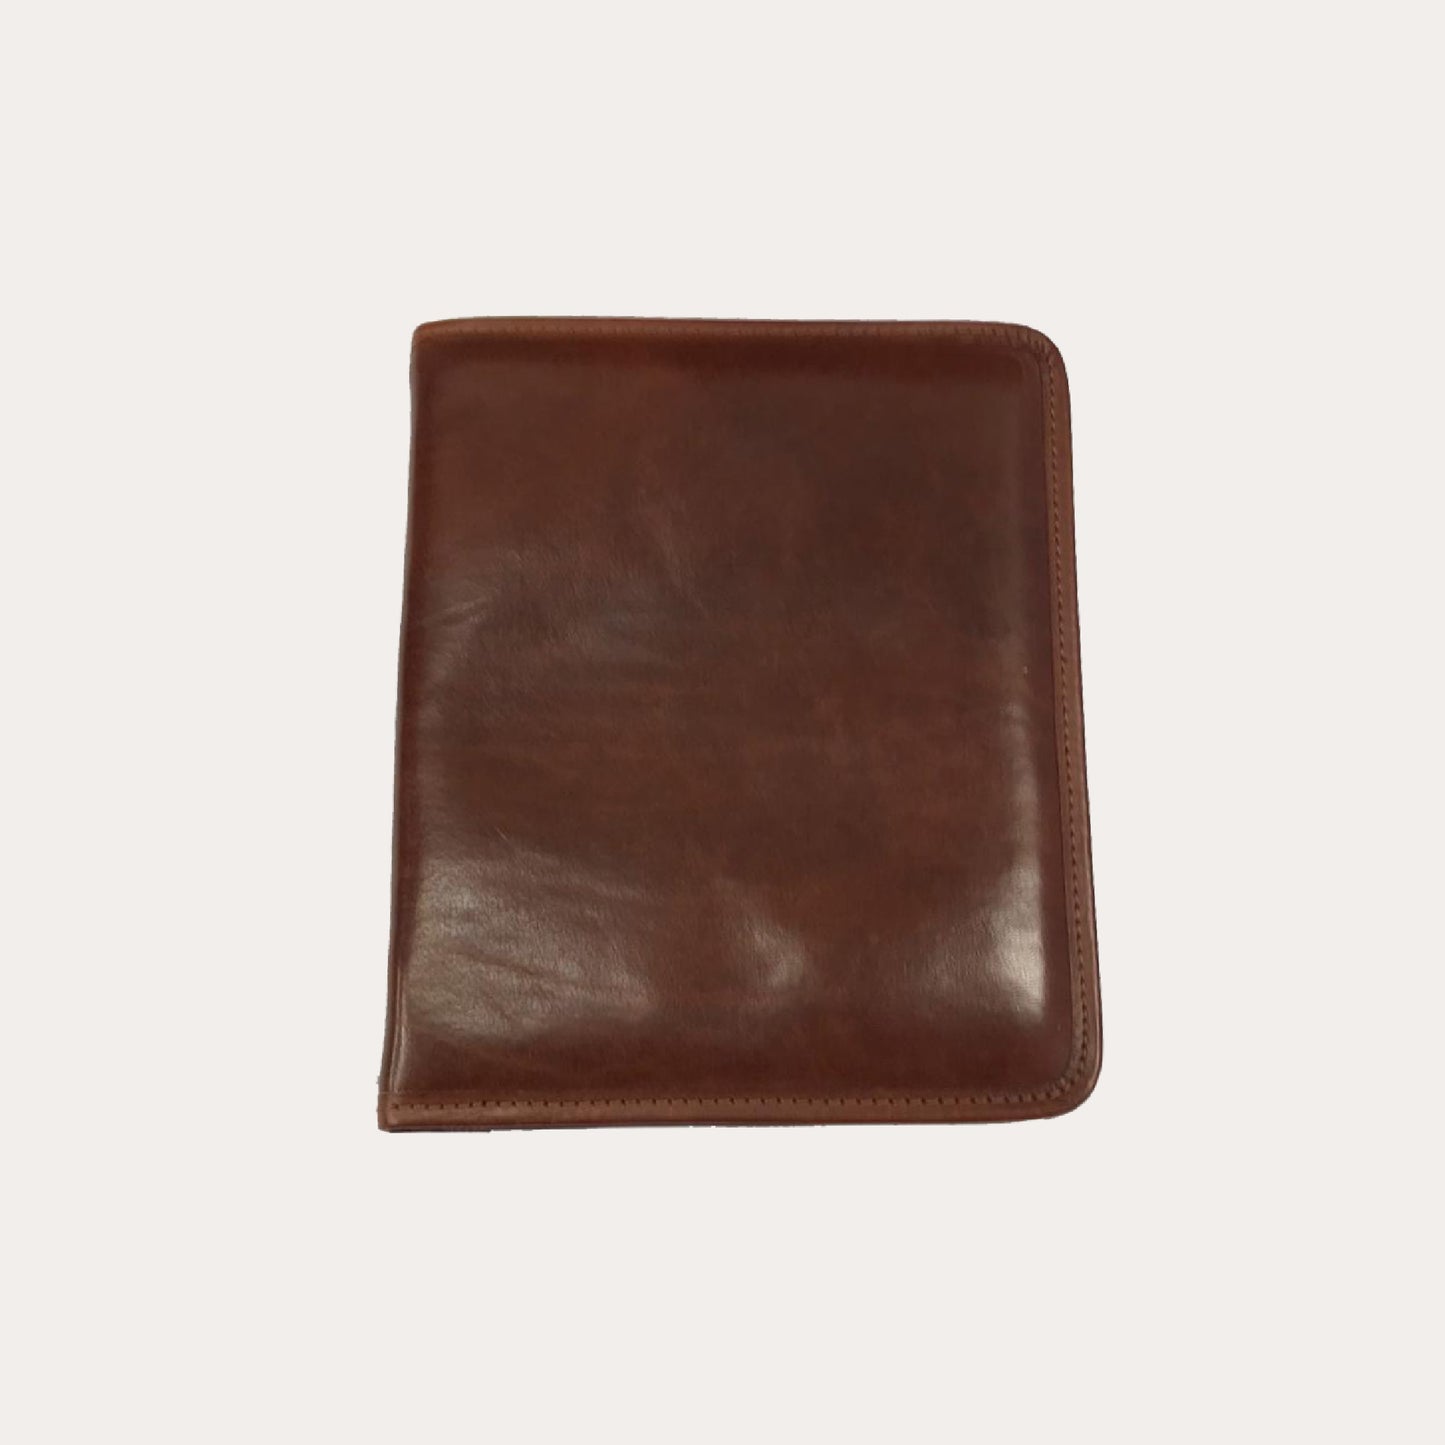 Chiarugi Brown Leather A5 Zipped Folio